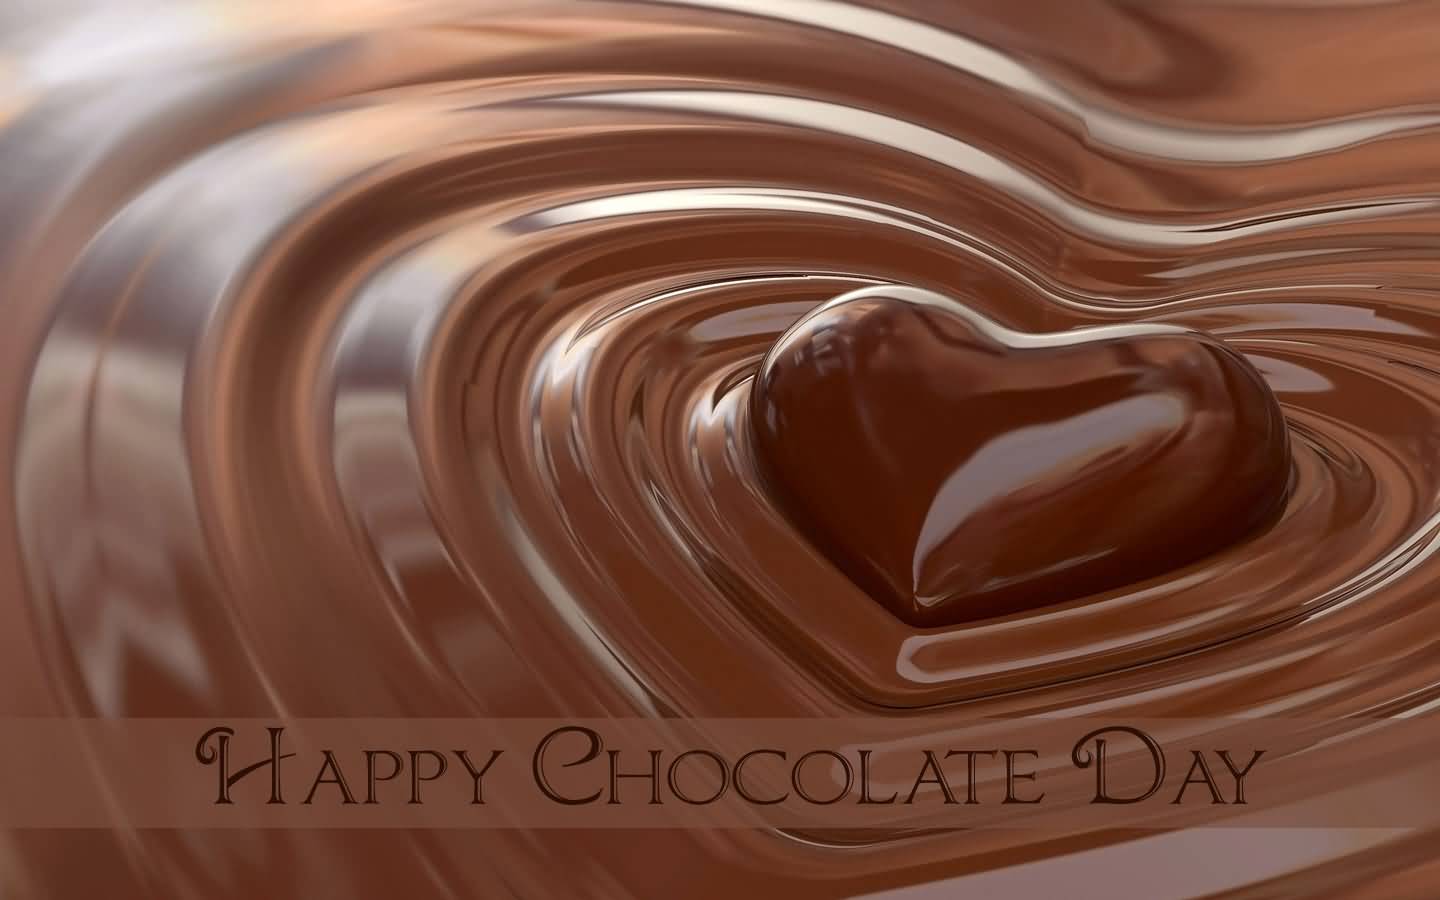 Happy Chocolate Day Heart Chocolate Image